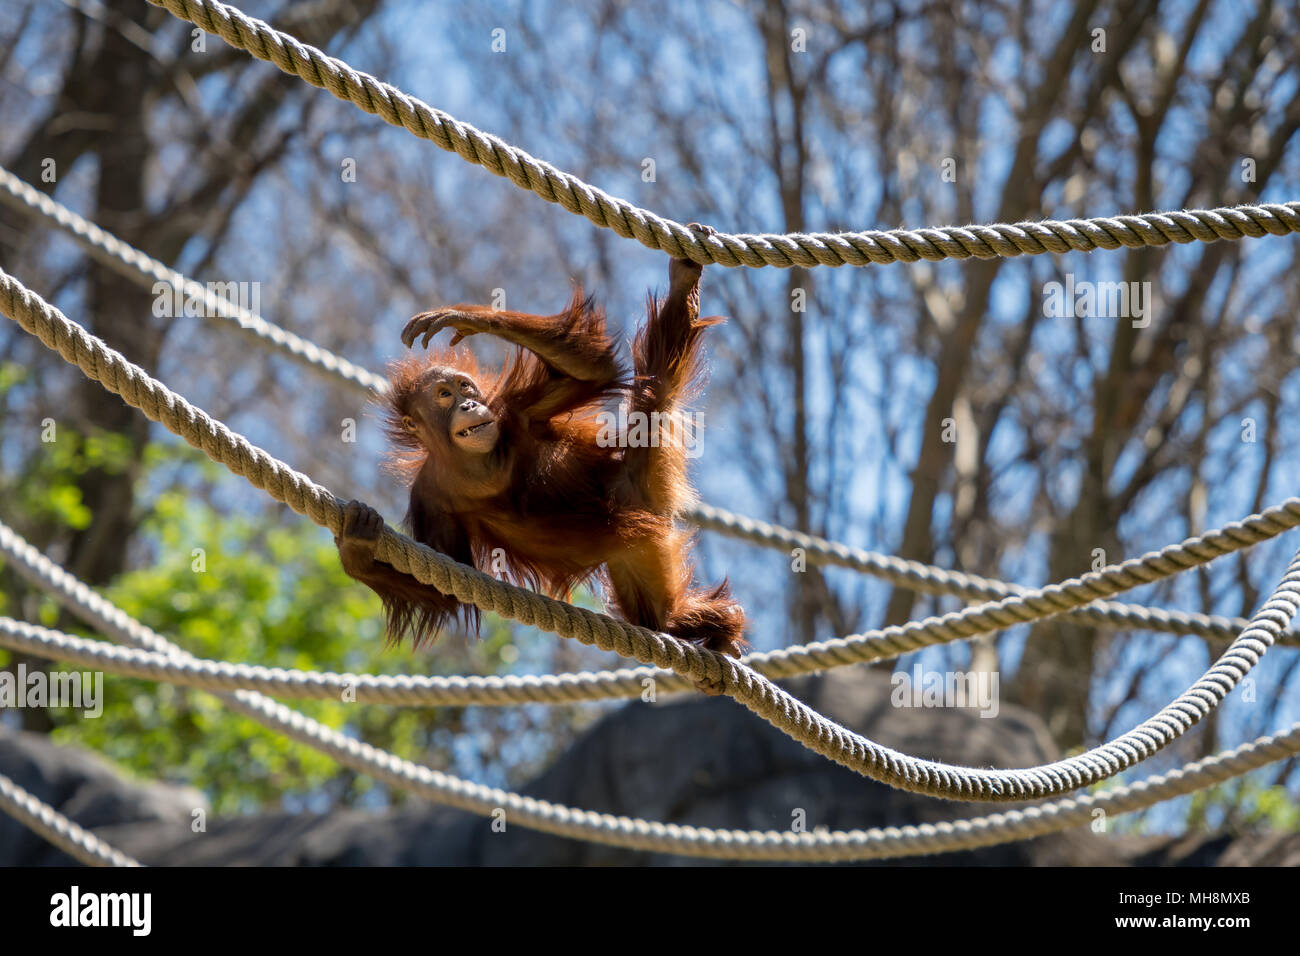 Orangutan Focuses On Rope while swinging Stock Photo